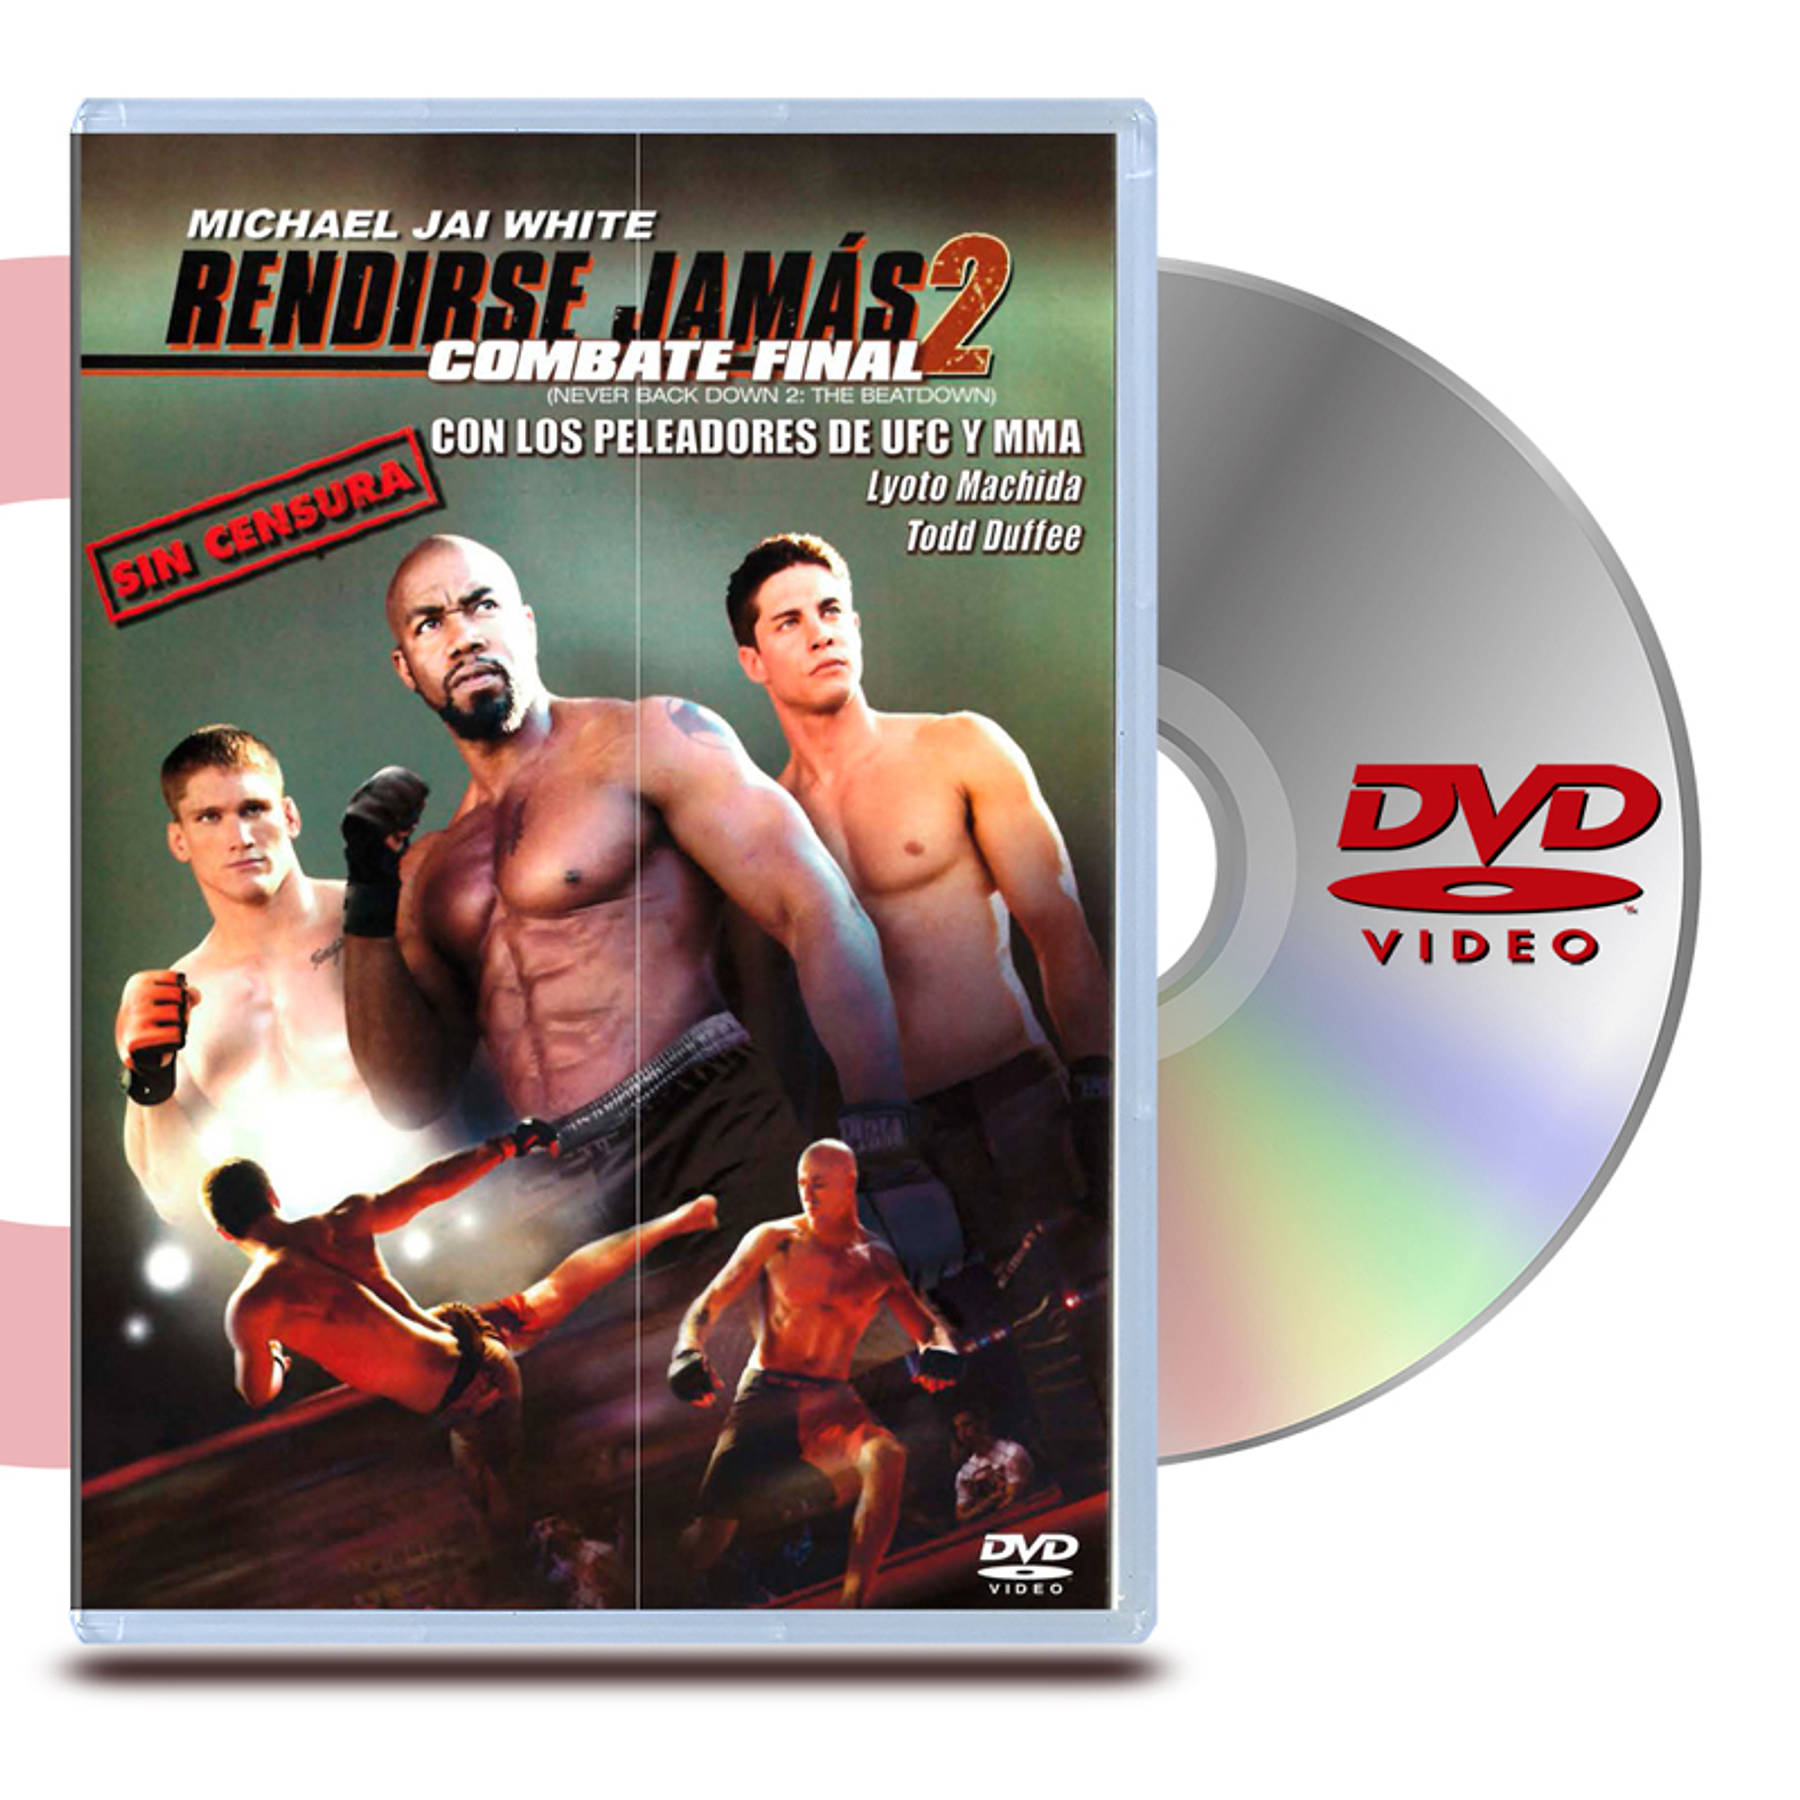 DVD RENDIRSE JAMAS 2: COMBATE FINAL